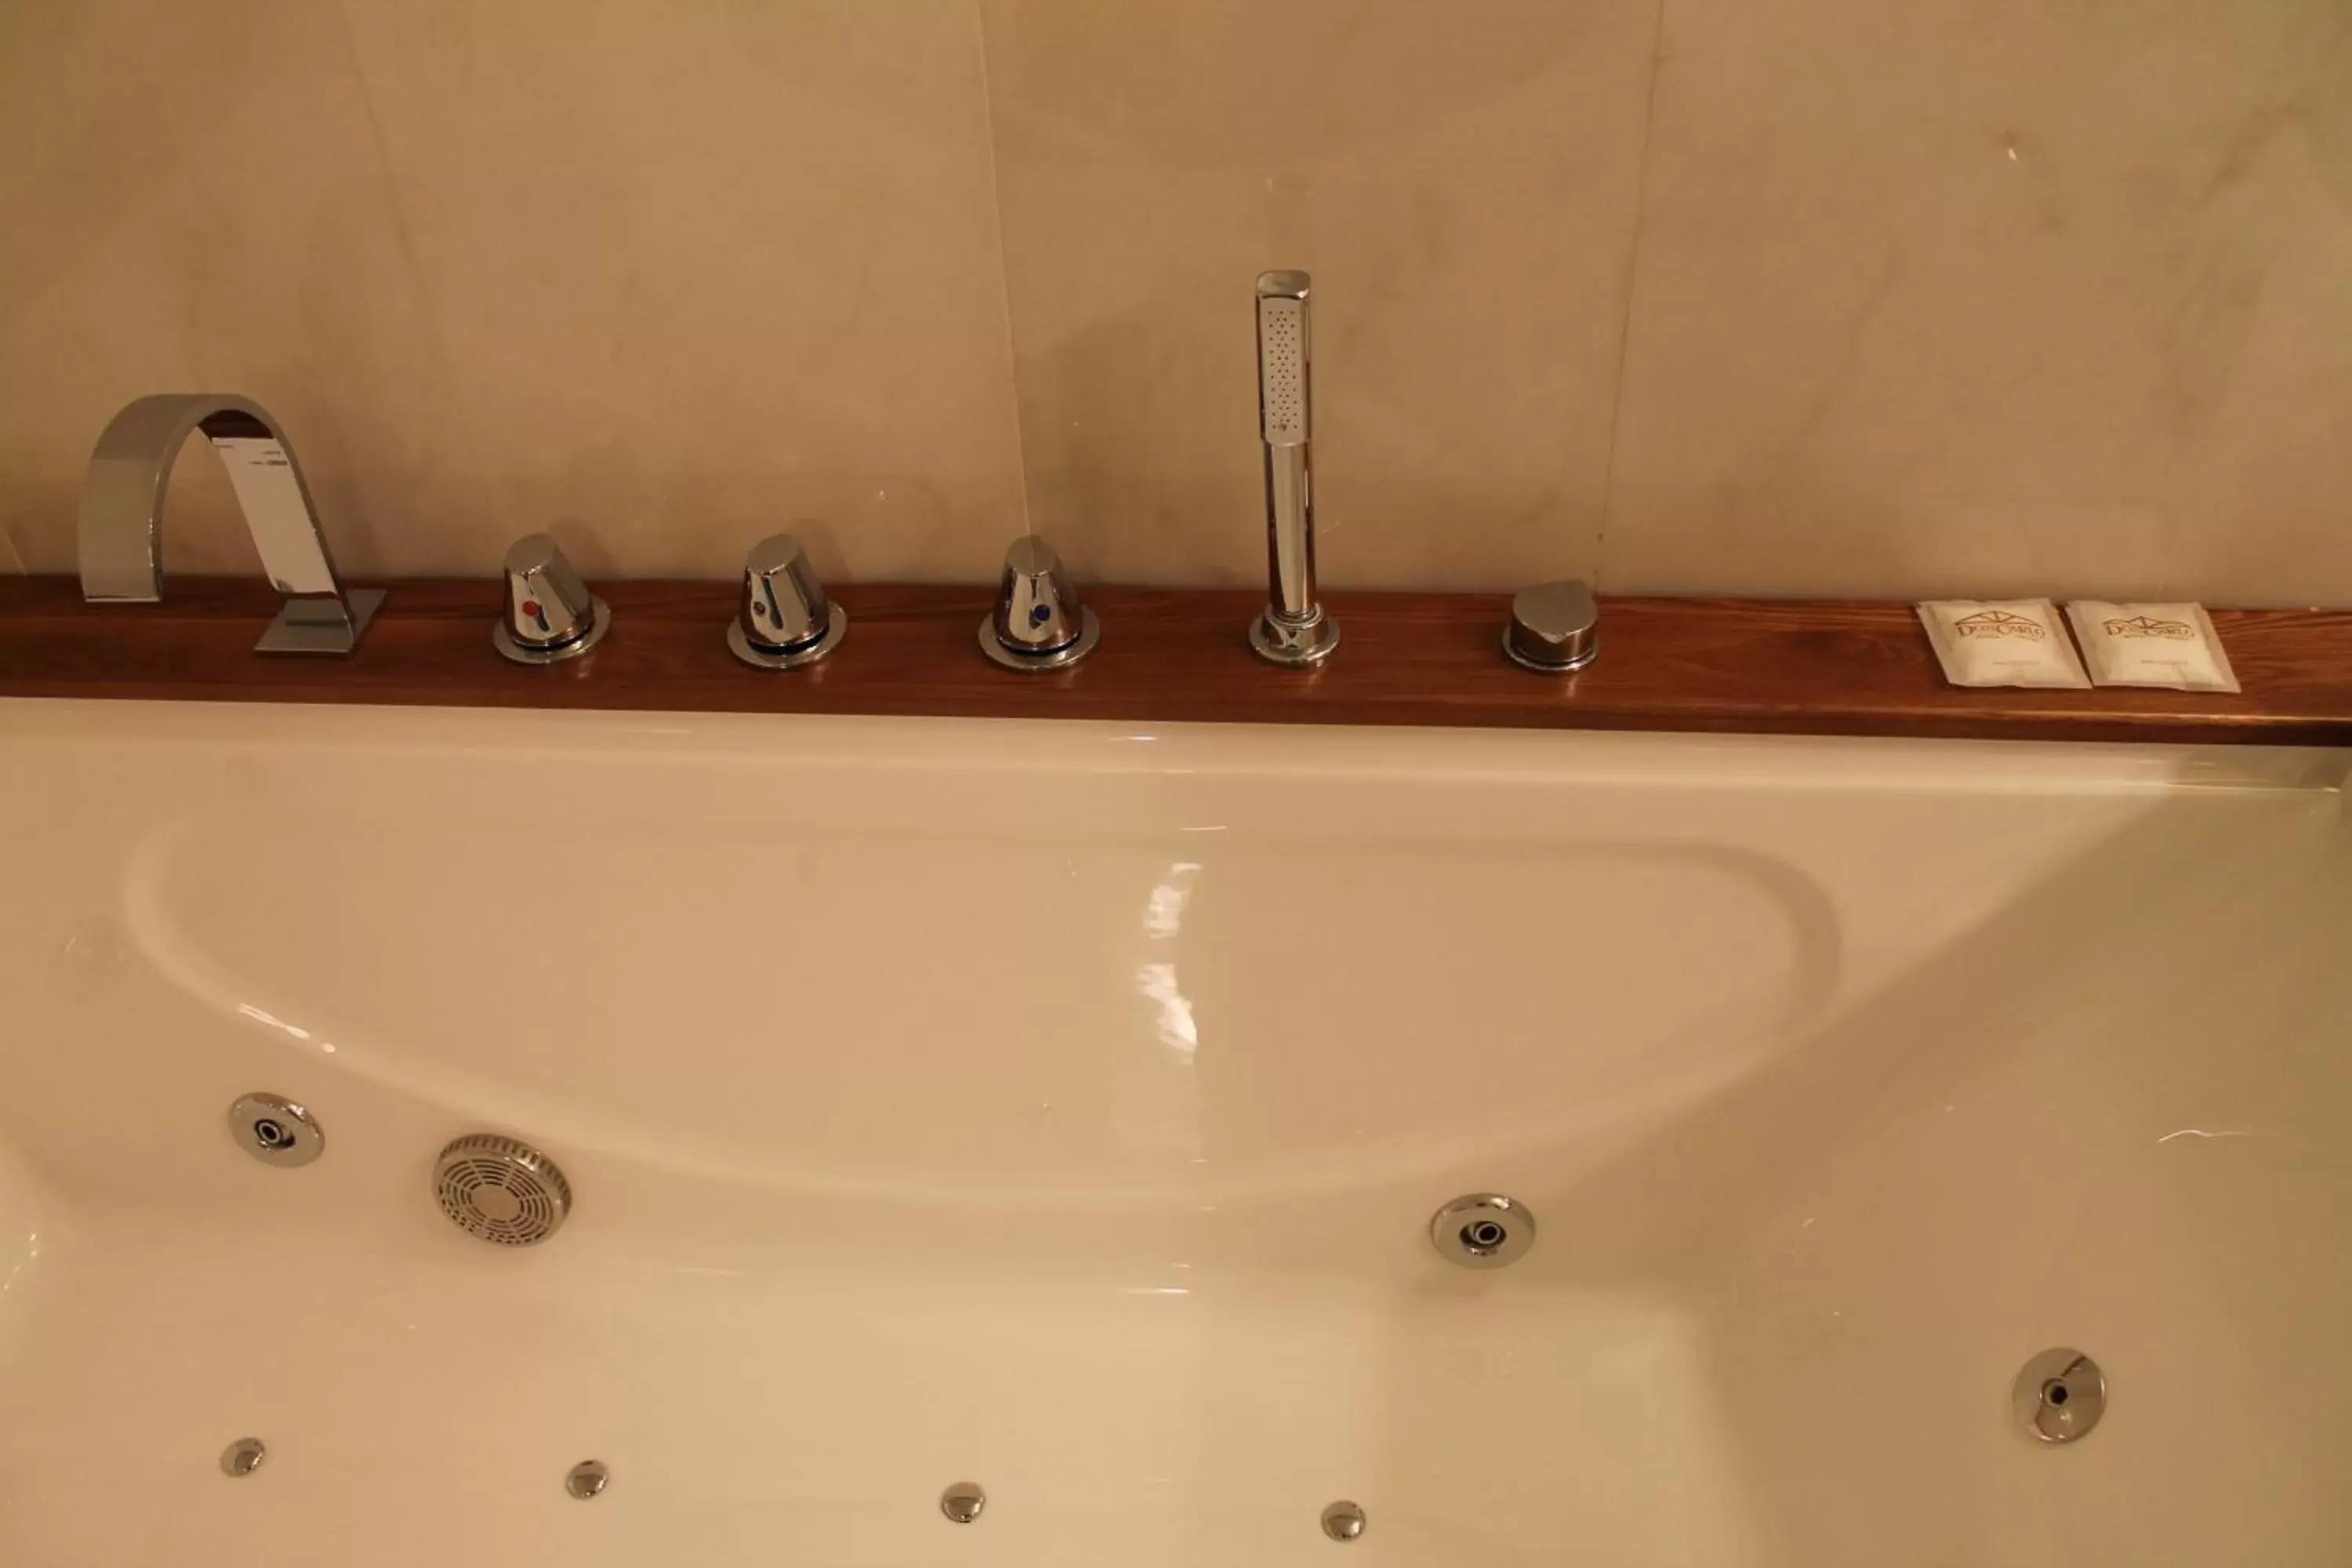 Bathroom in Hotel Don Carlo